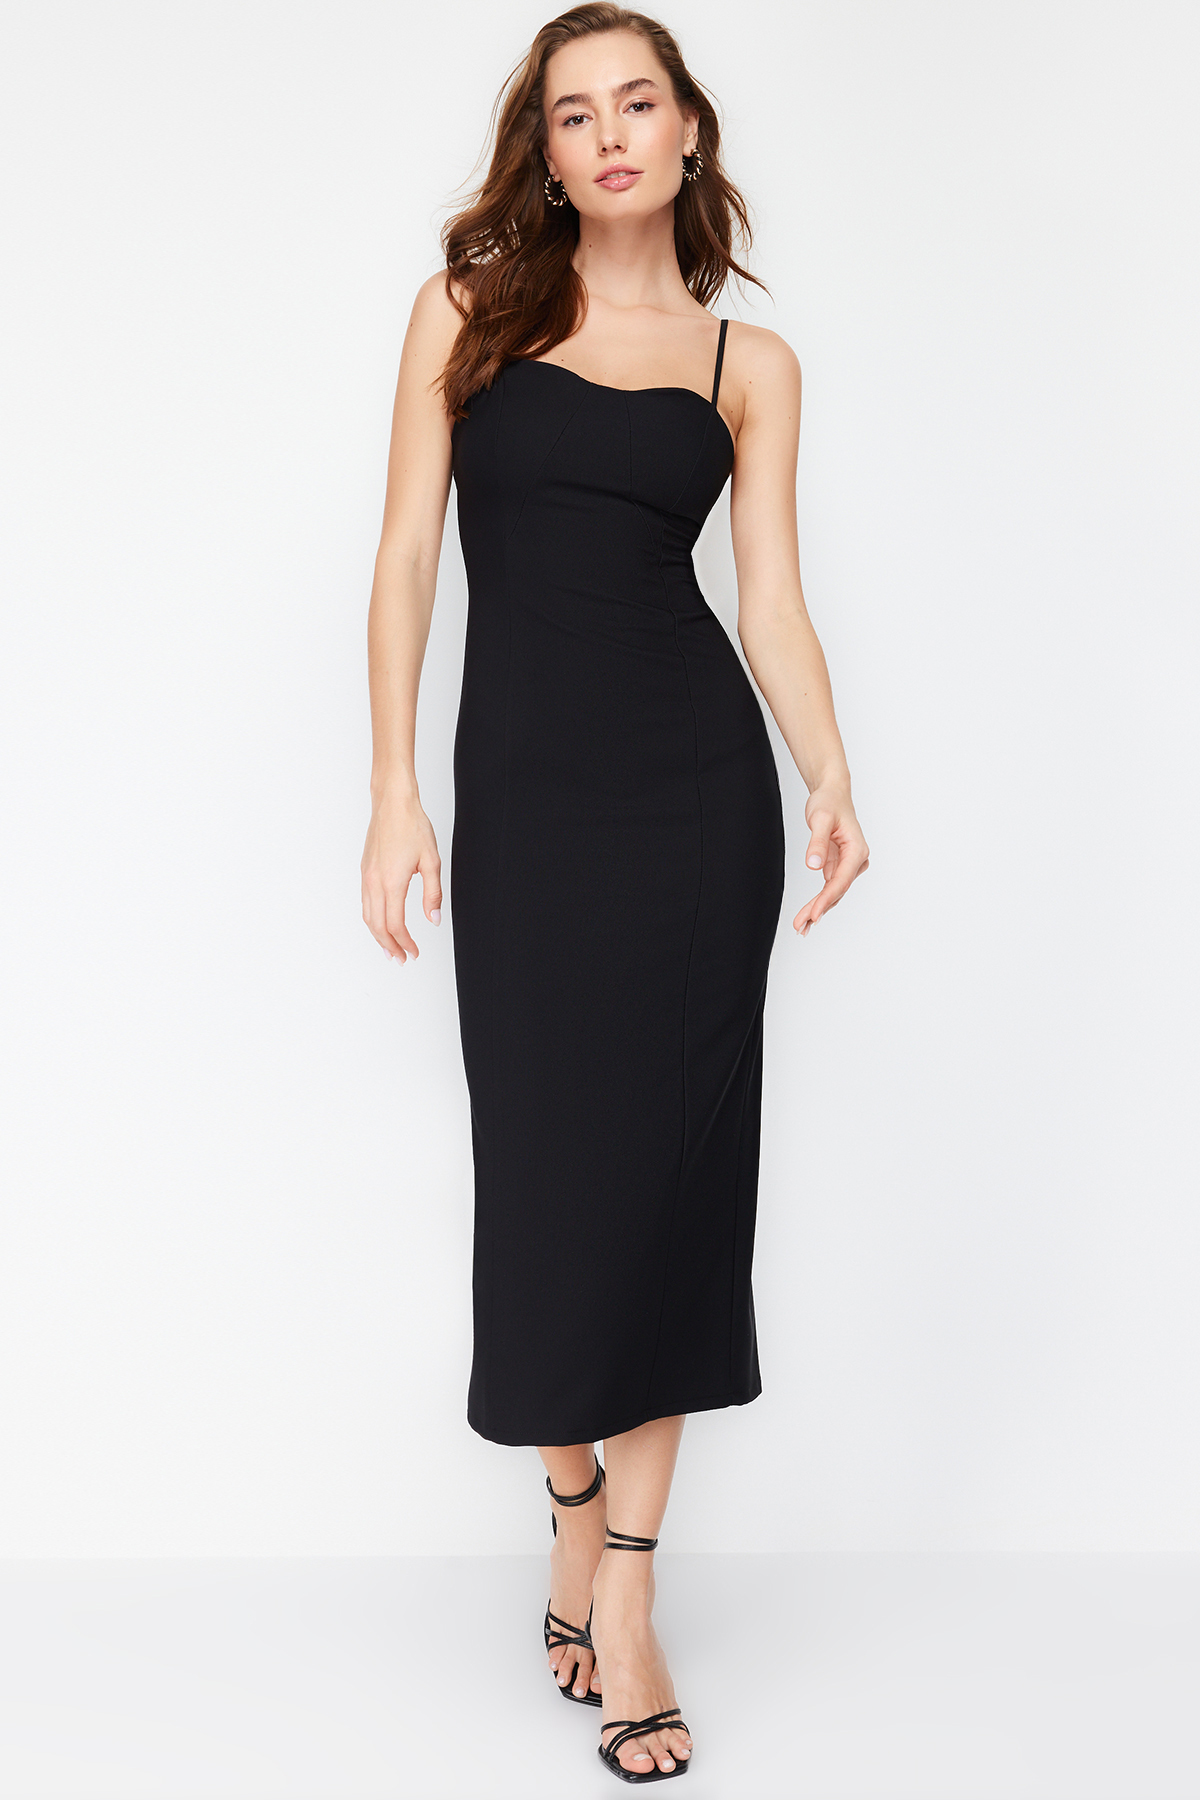 Trendyol Black Wrap-around Maxi Strappy Woven Dress